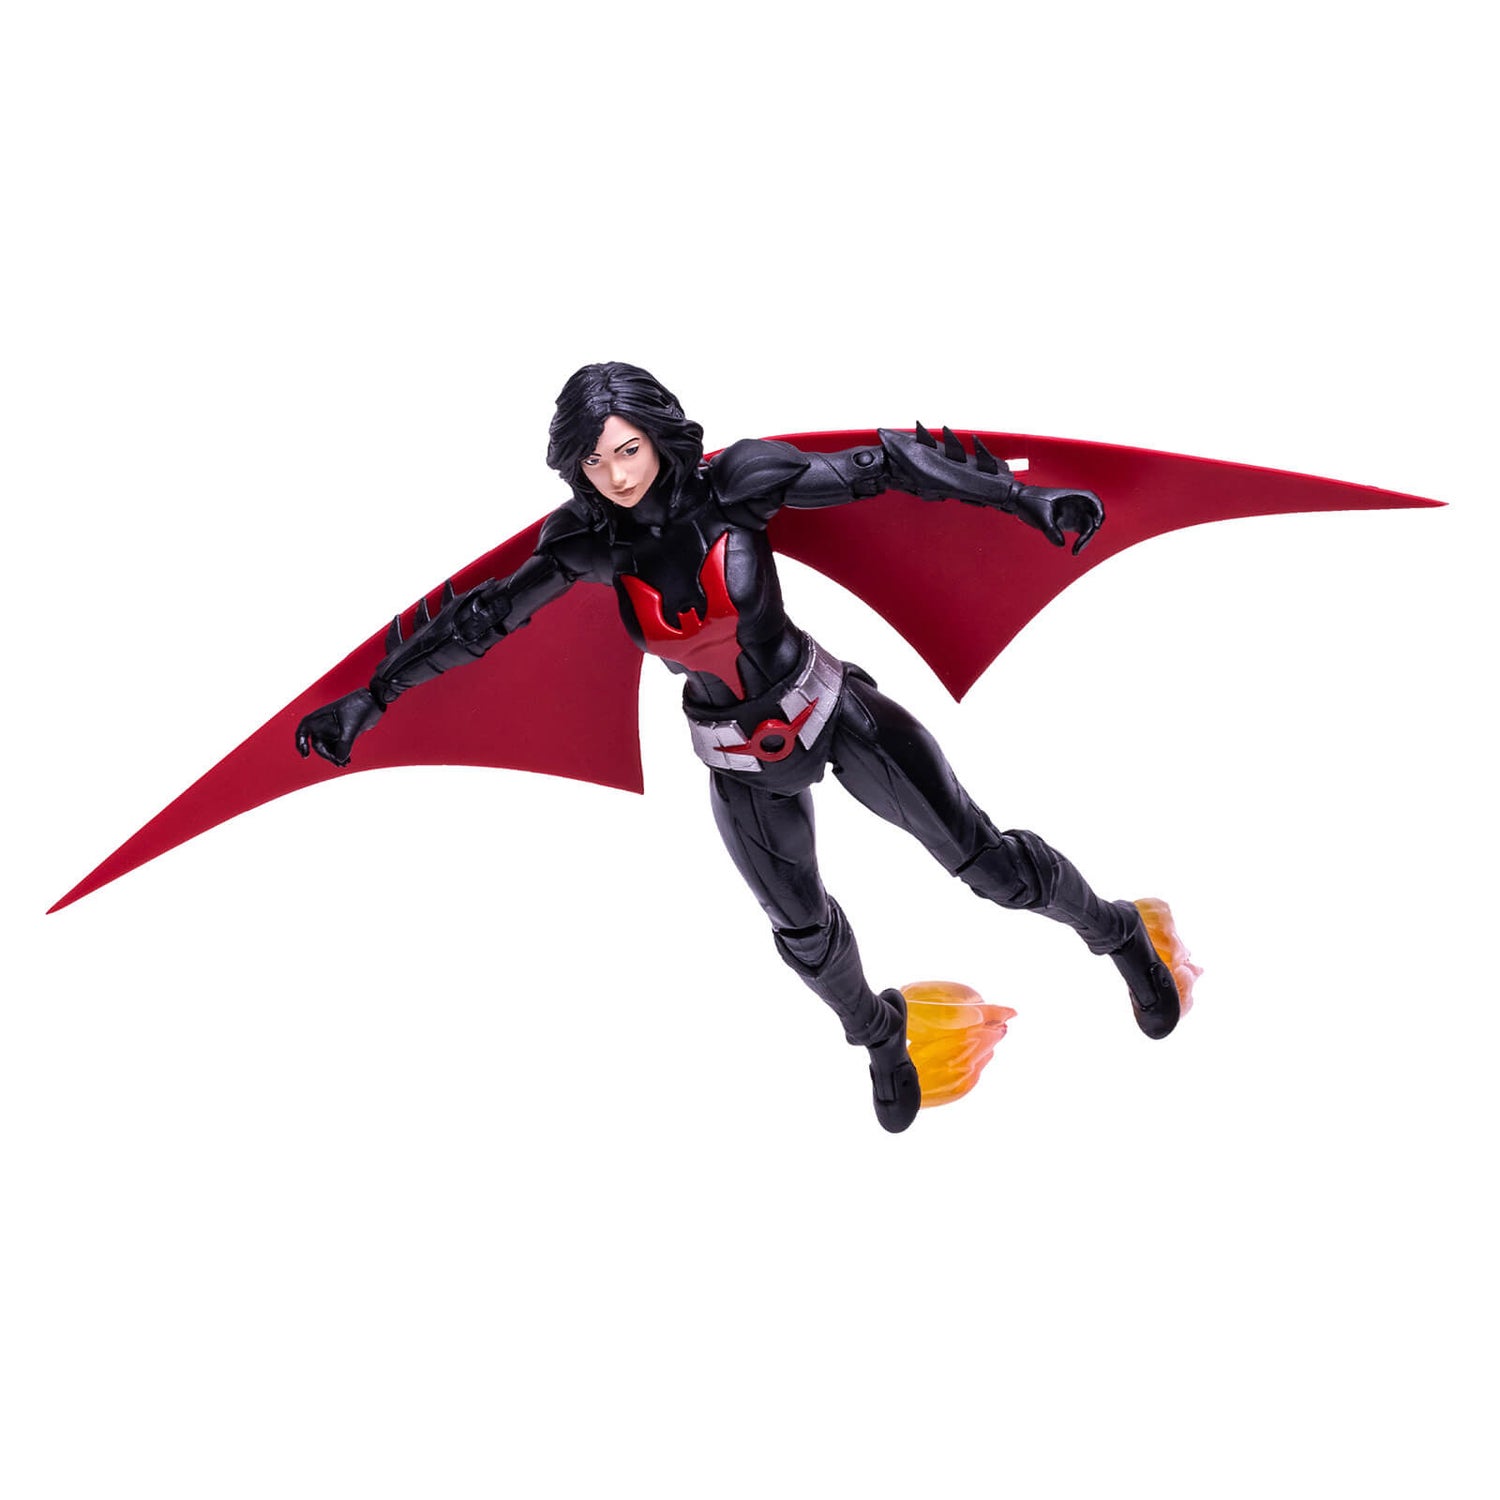 McFarlane DC Multiverse 7" Action Figure - Batwoman Unmasked (Batman Beyond)